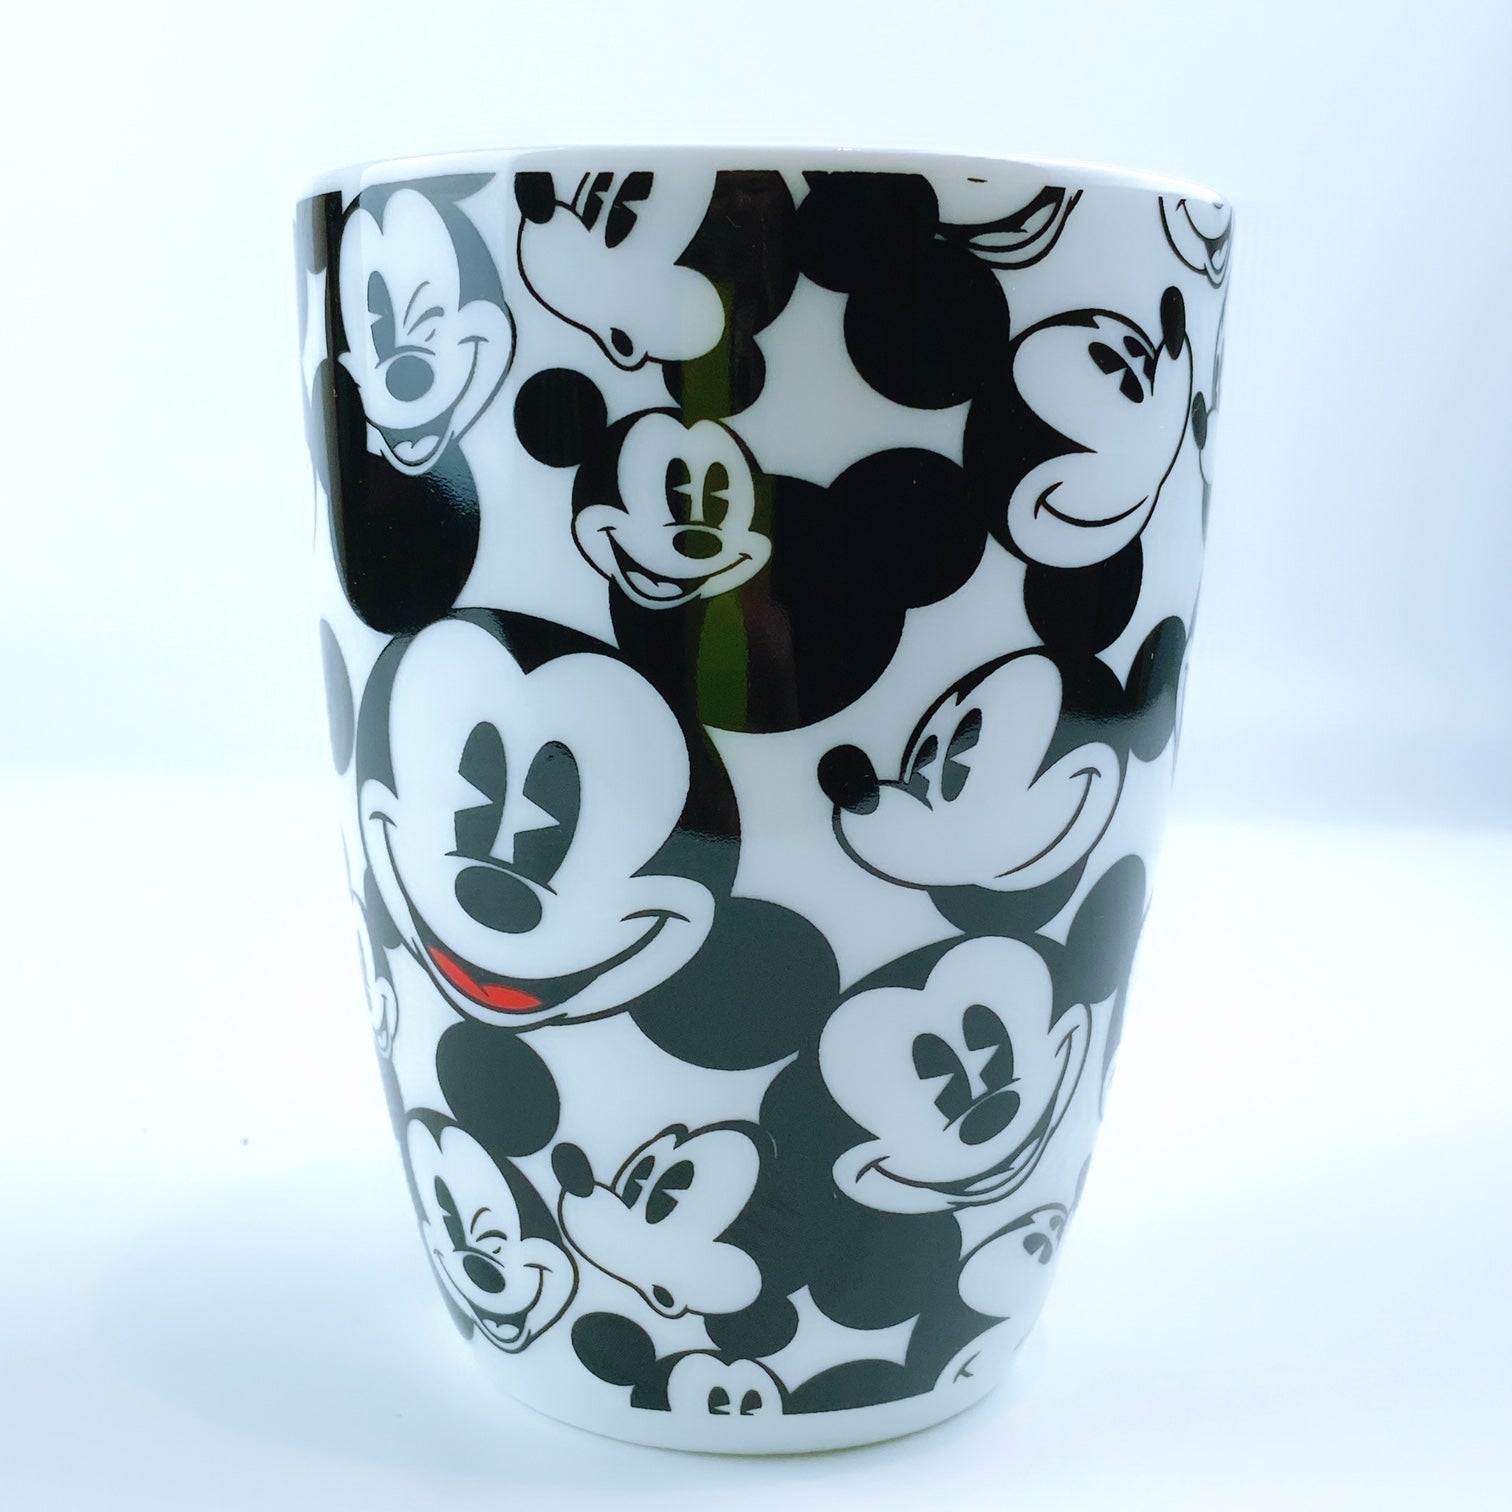 Disney Mickey Mouse Coffee Mug Black and Red 12 Oz